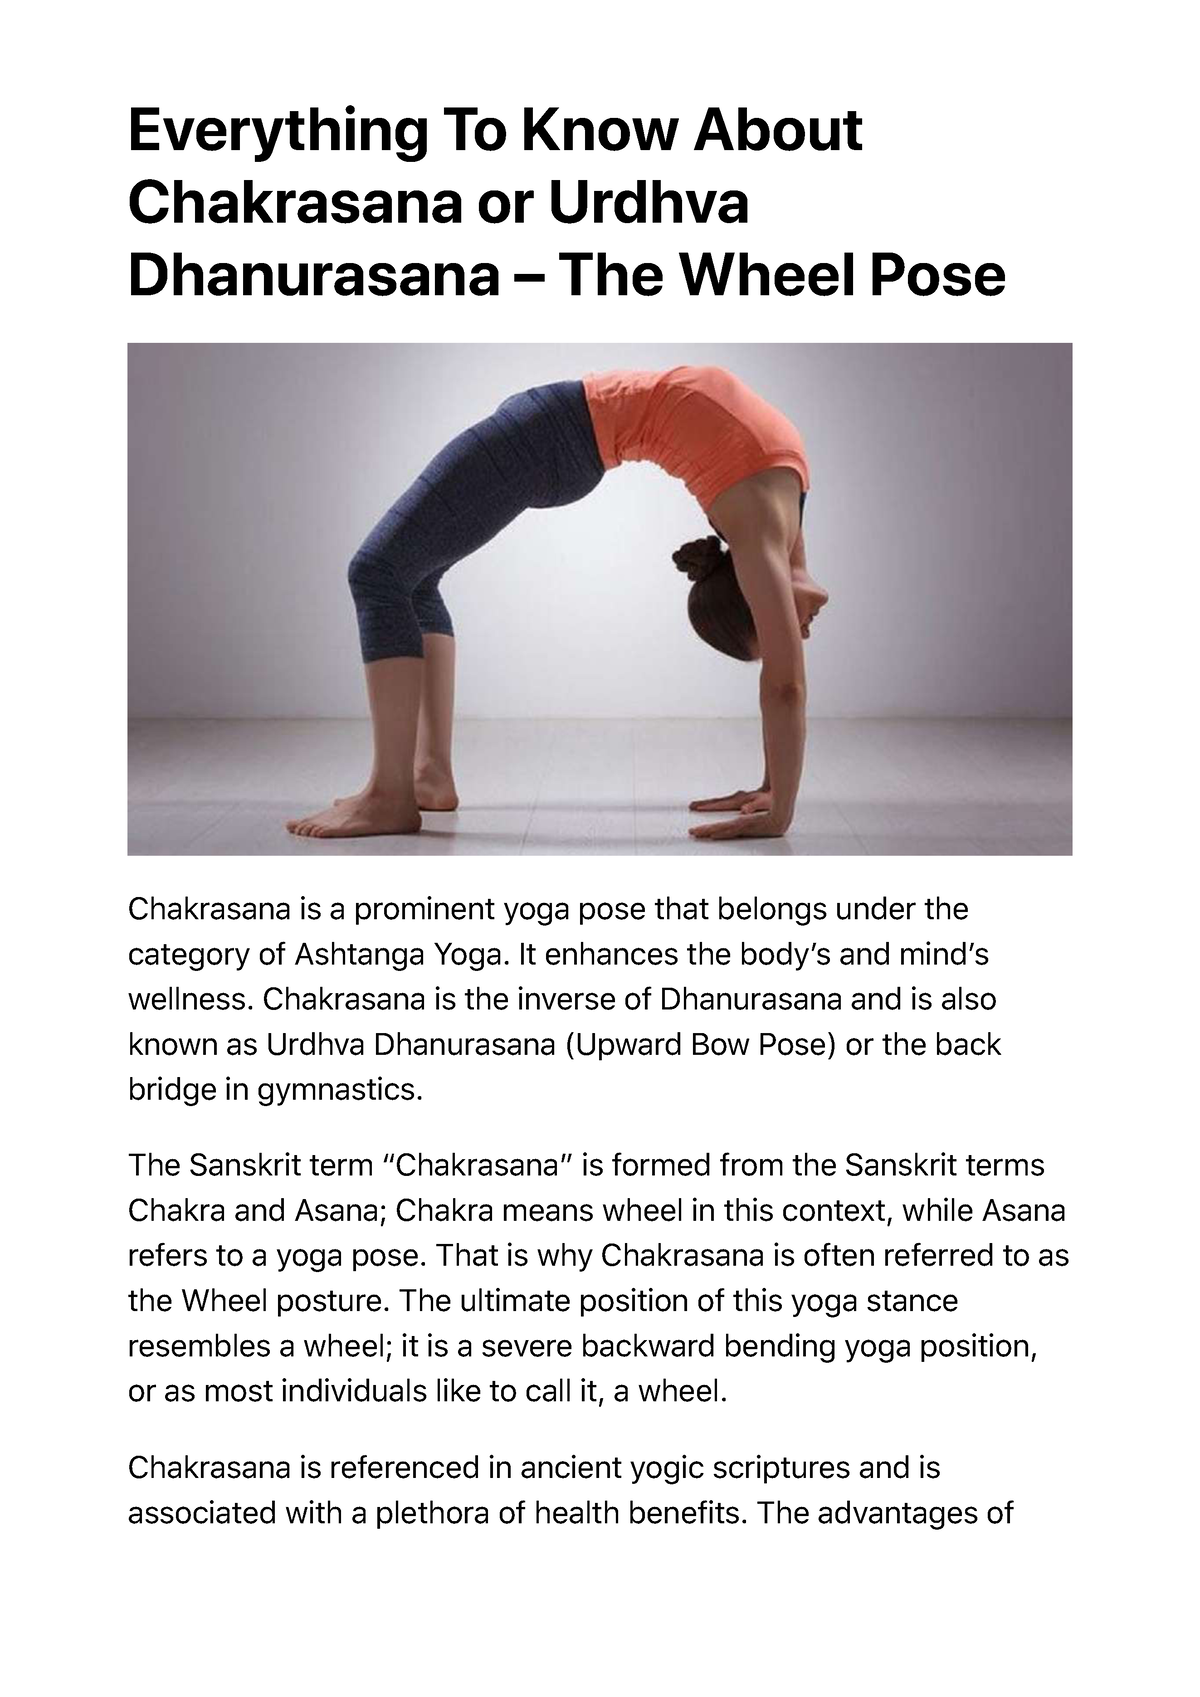 Chakrasana Yoga - The Wheel Pose and Its Benefits - Delhi Magazine :  r/yoga_shorts